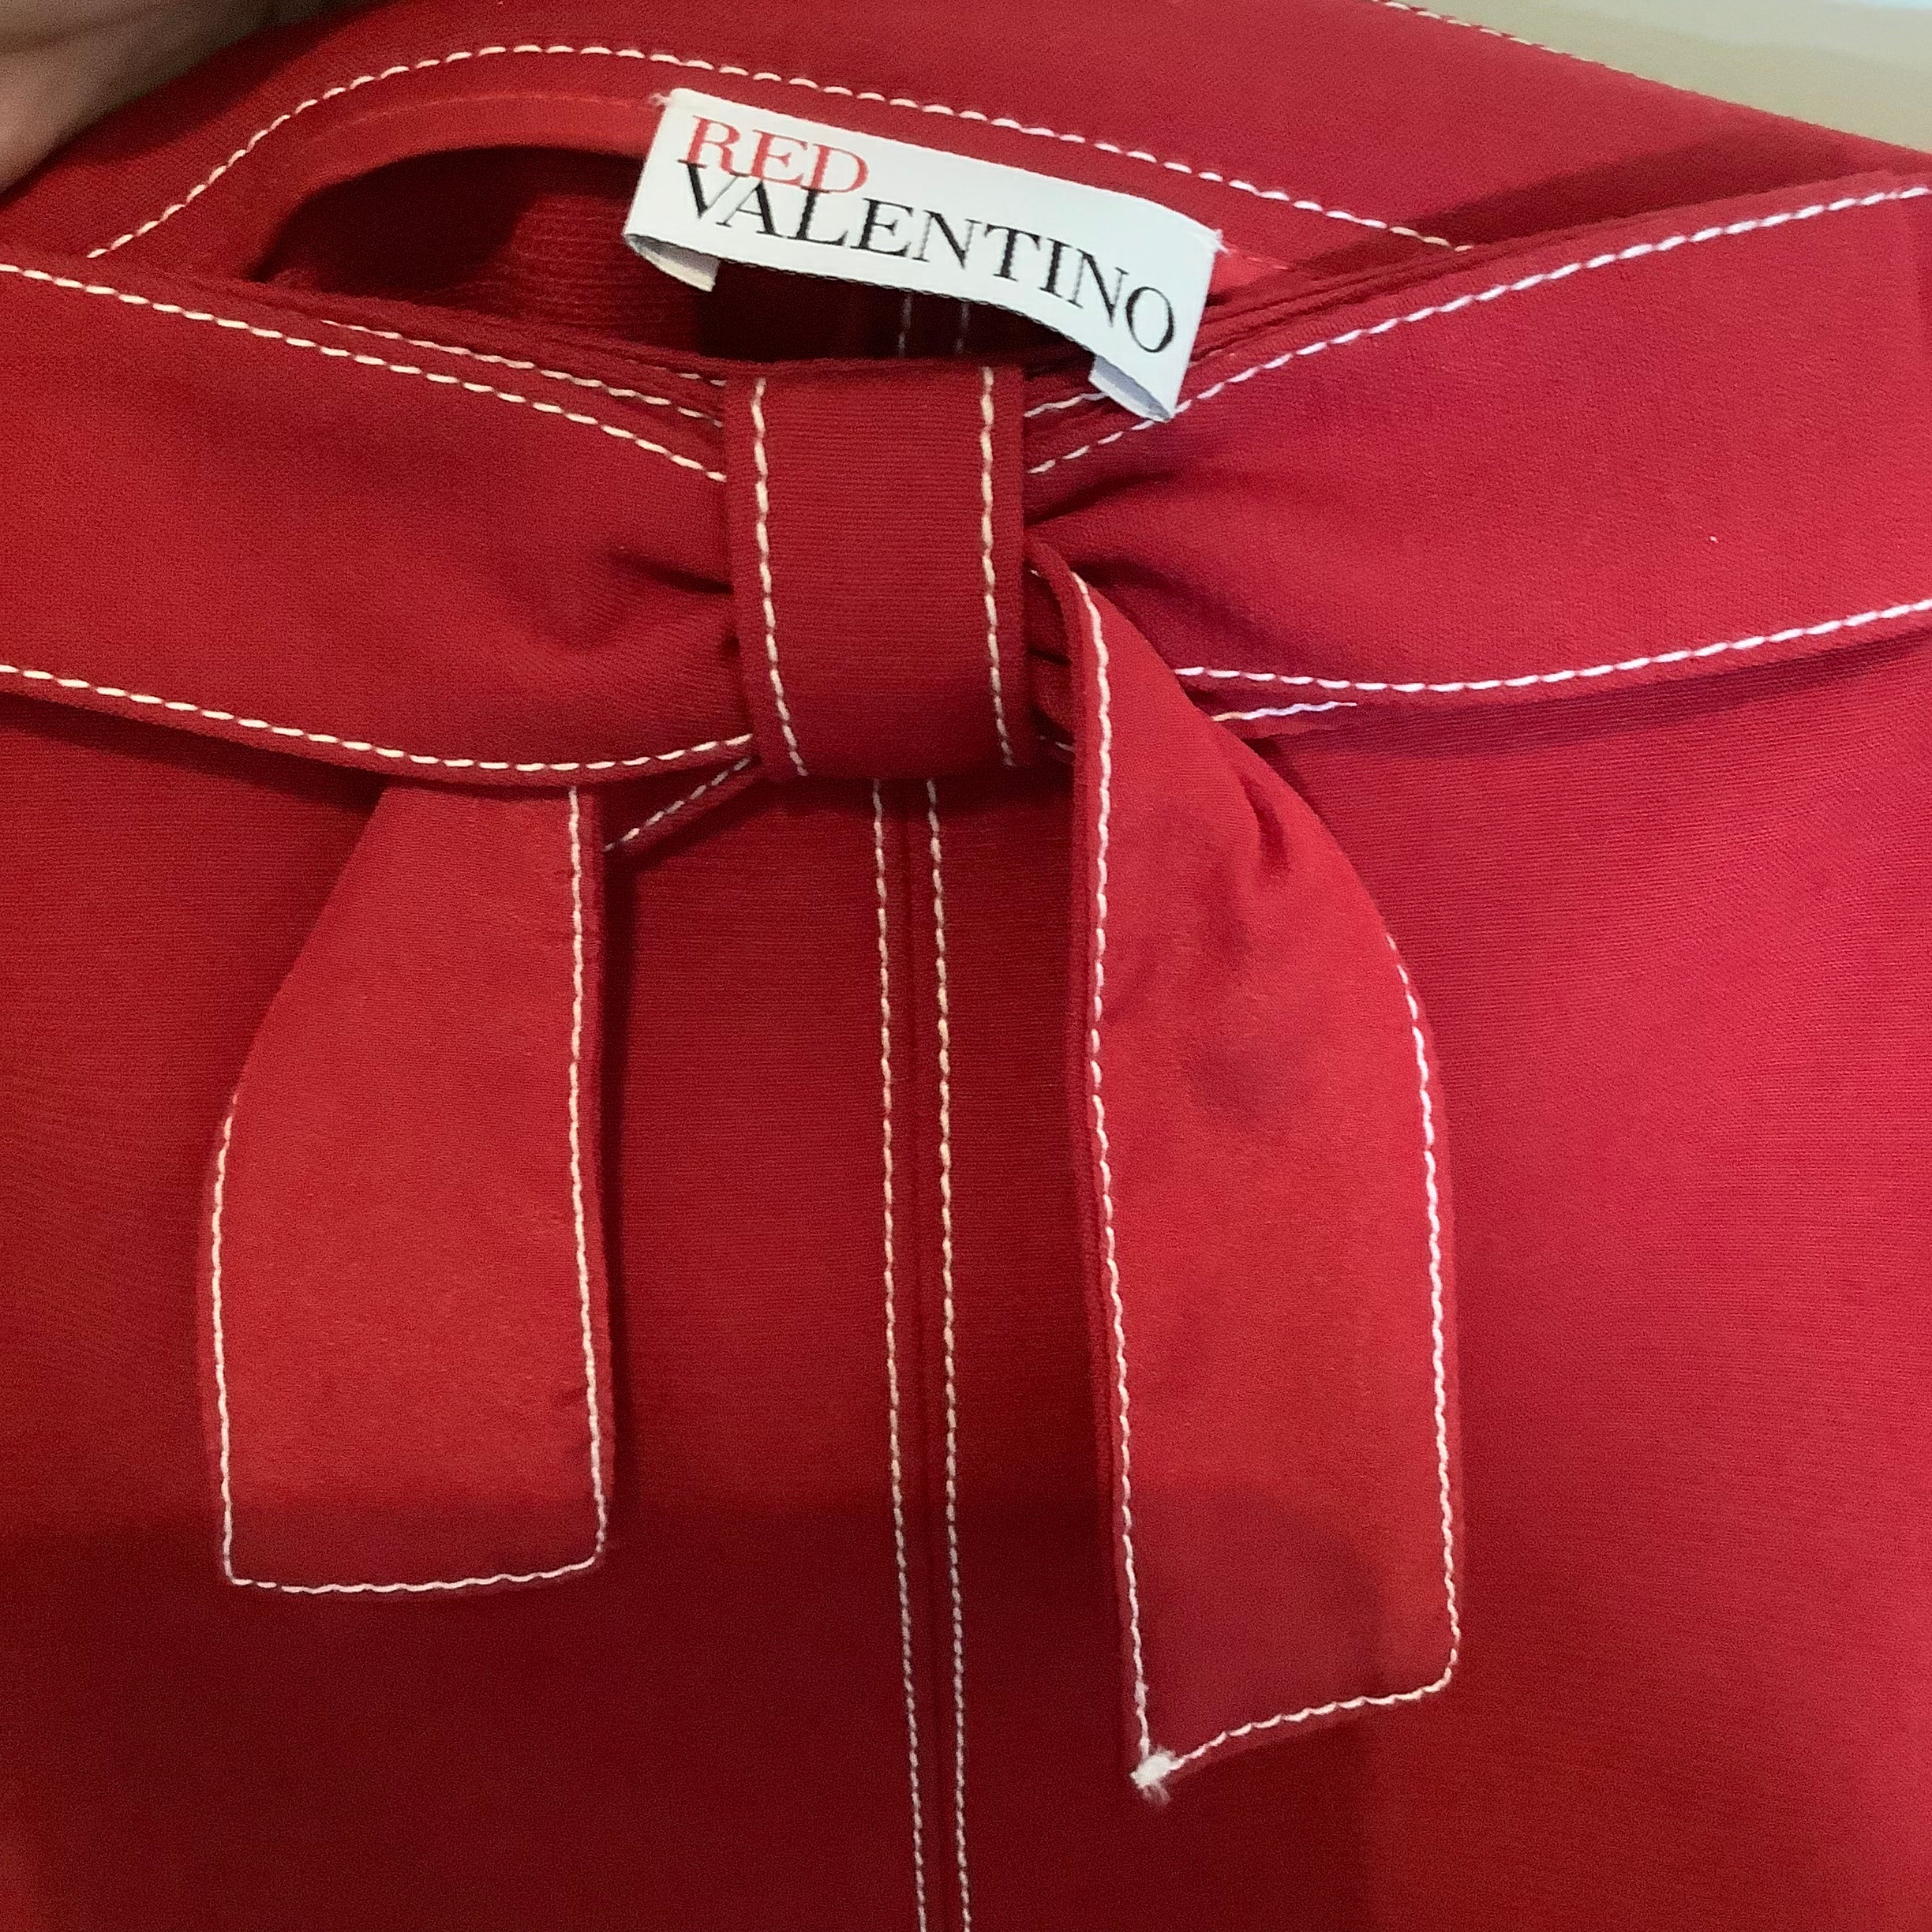 Valentino Red Skirt Size Medium